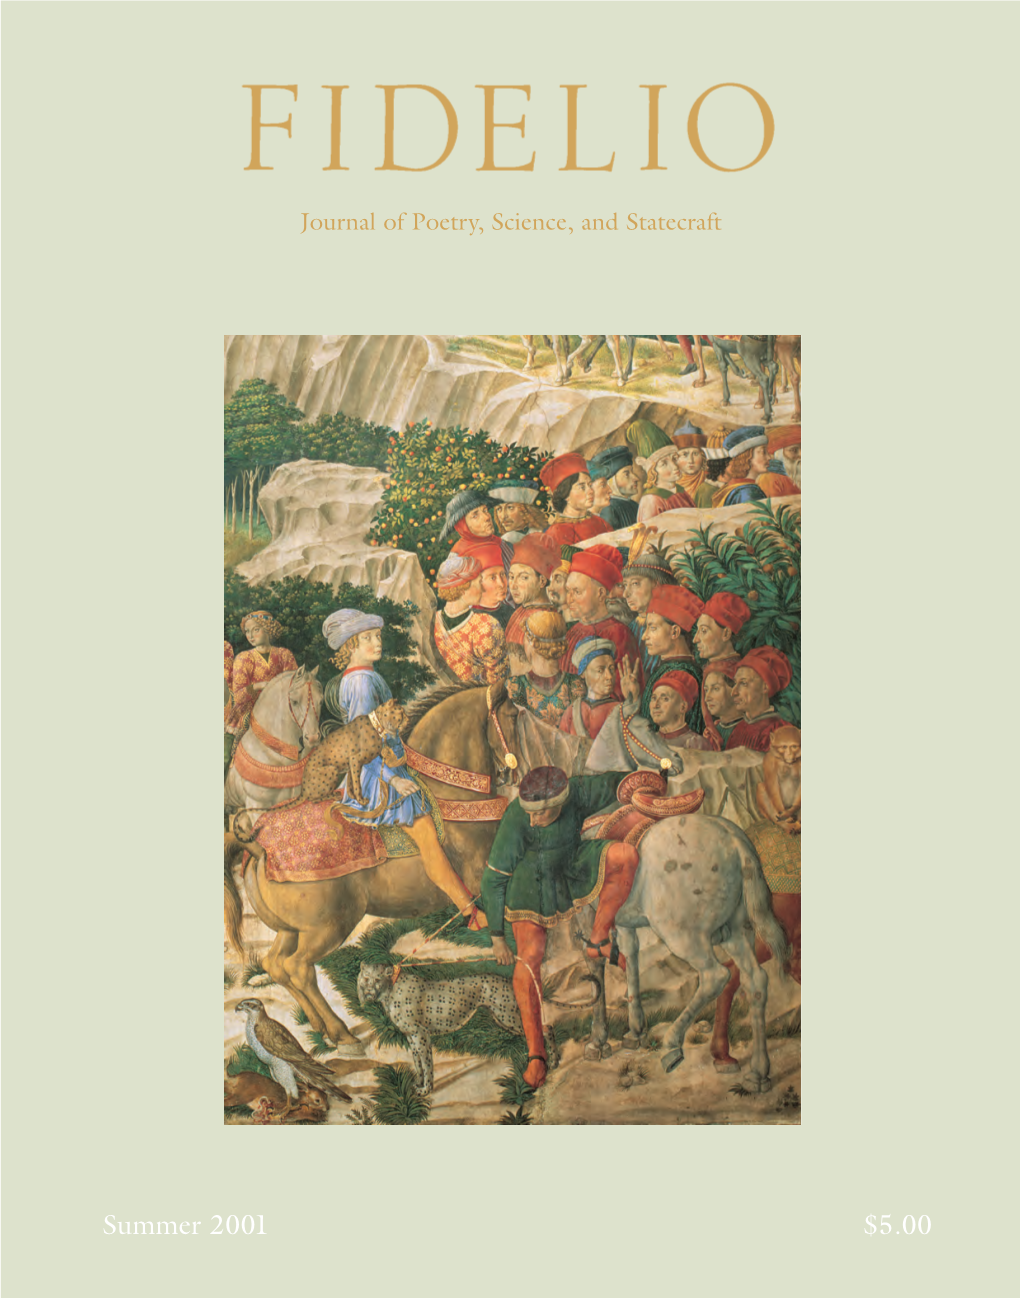 Fidelio, Volume 10, Number 2, Summer 2001